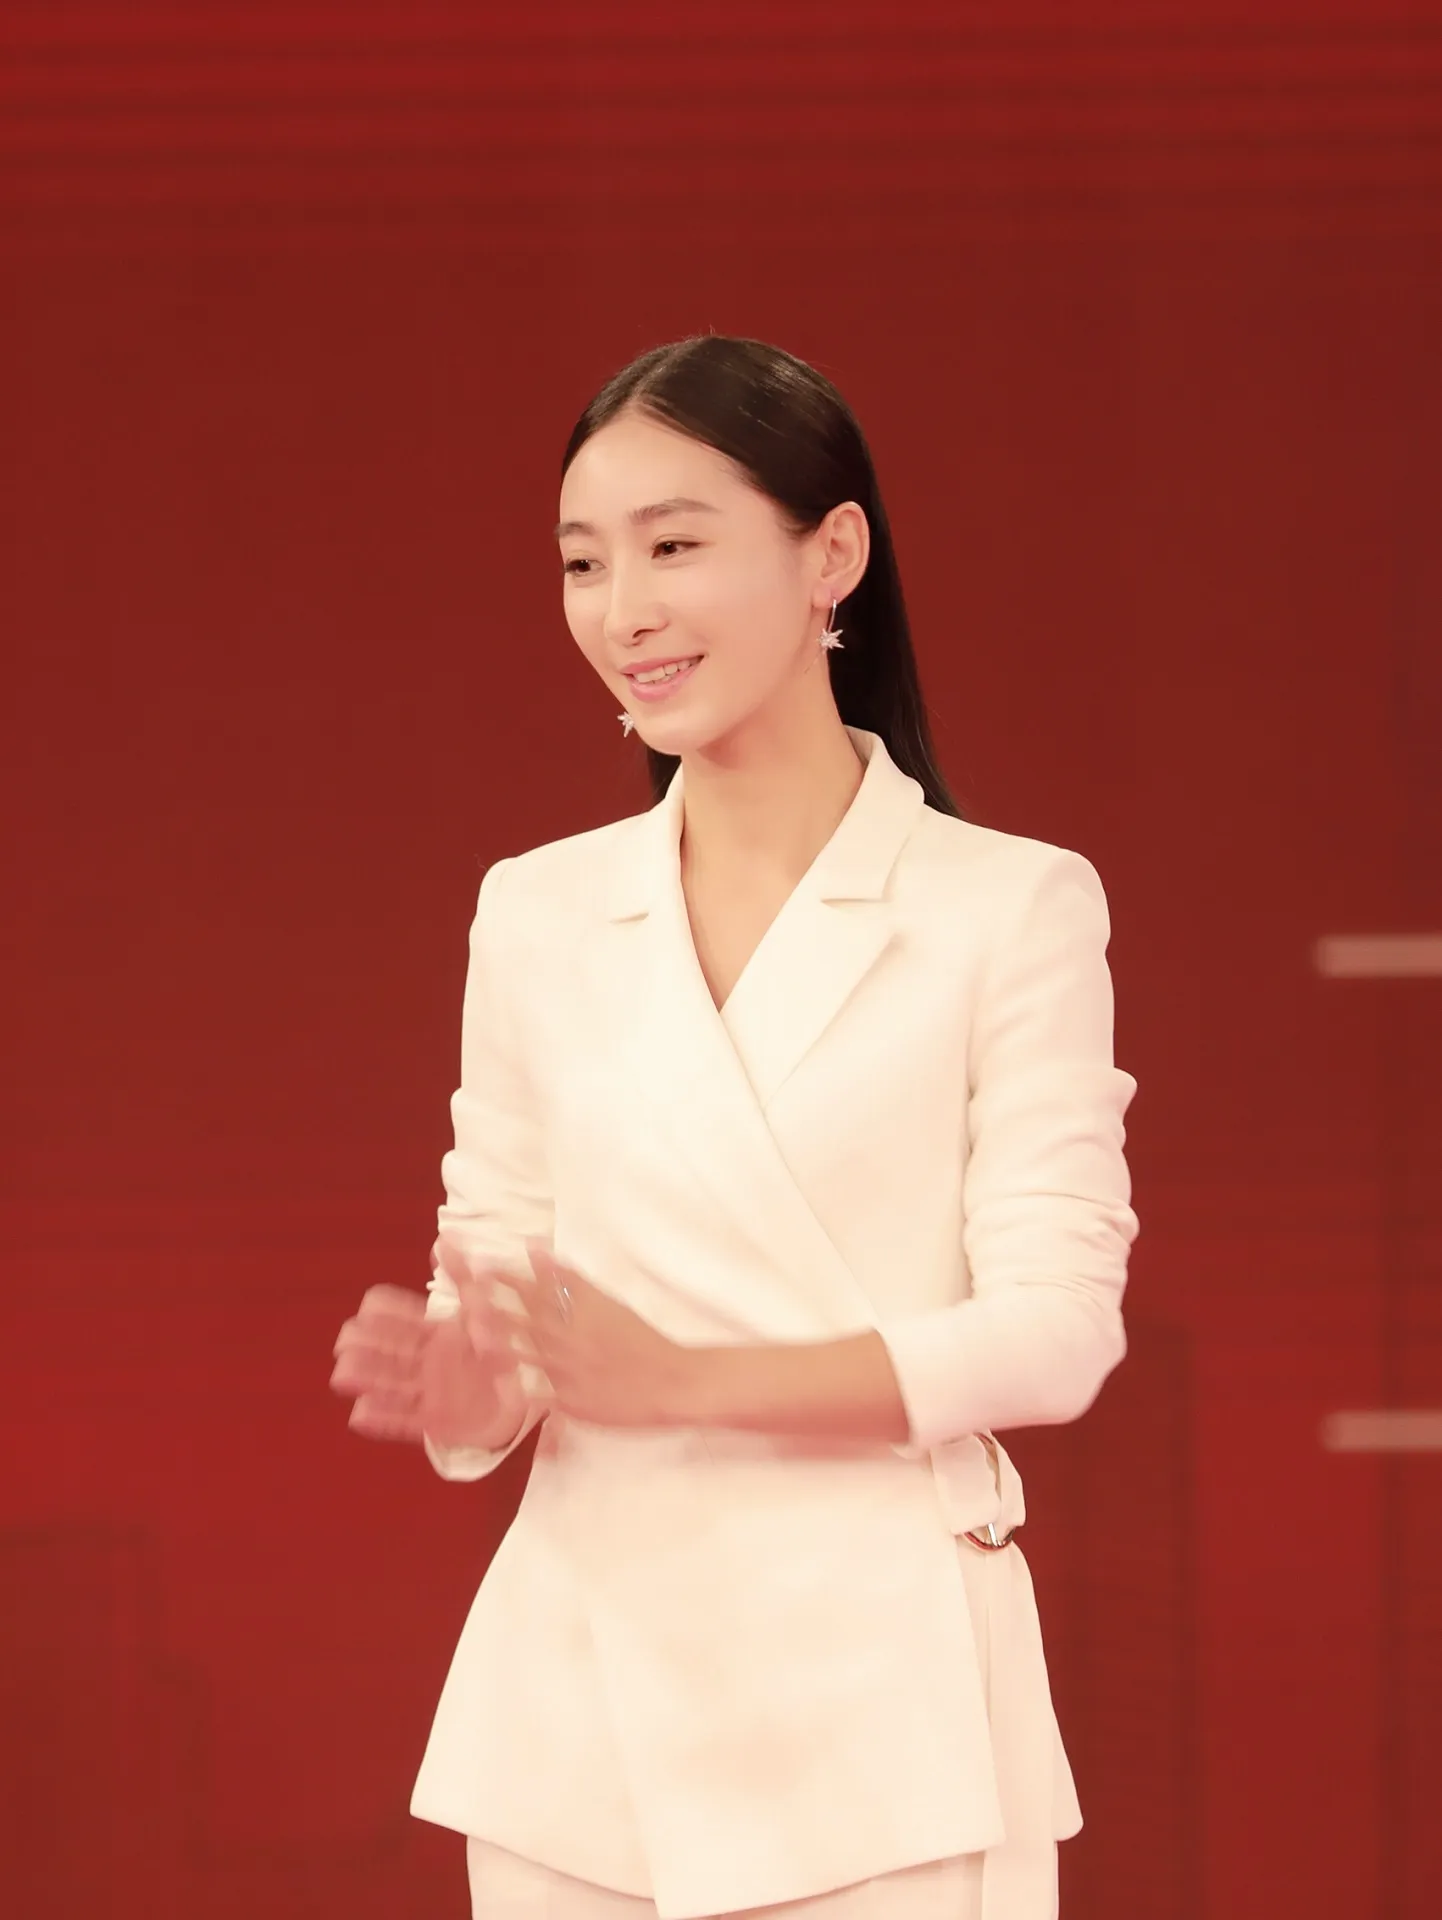 Tao Xinran white suit fashionable and elegant. JPG